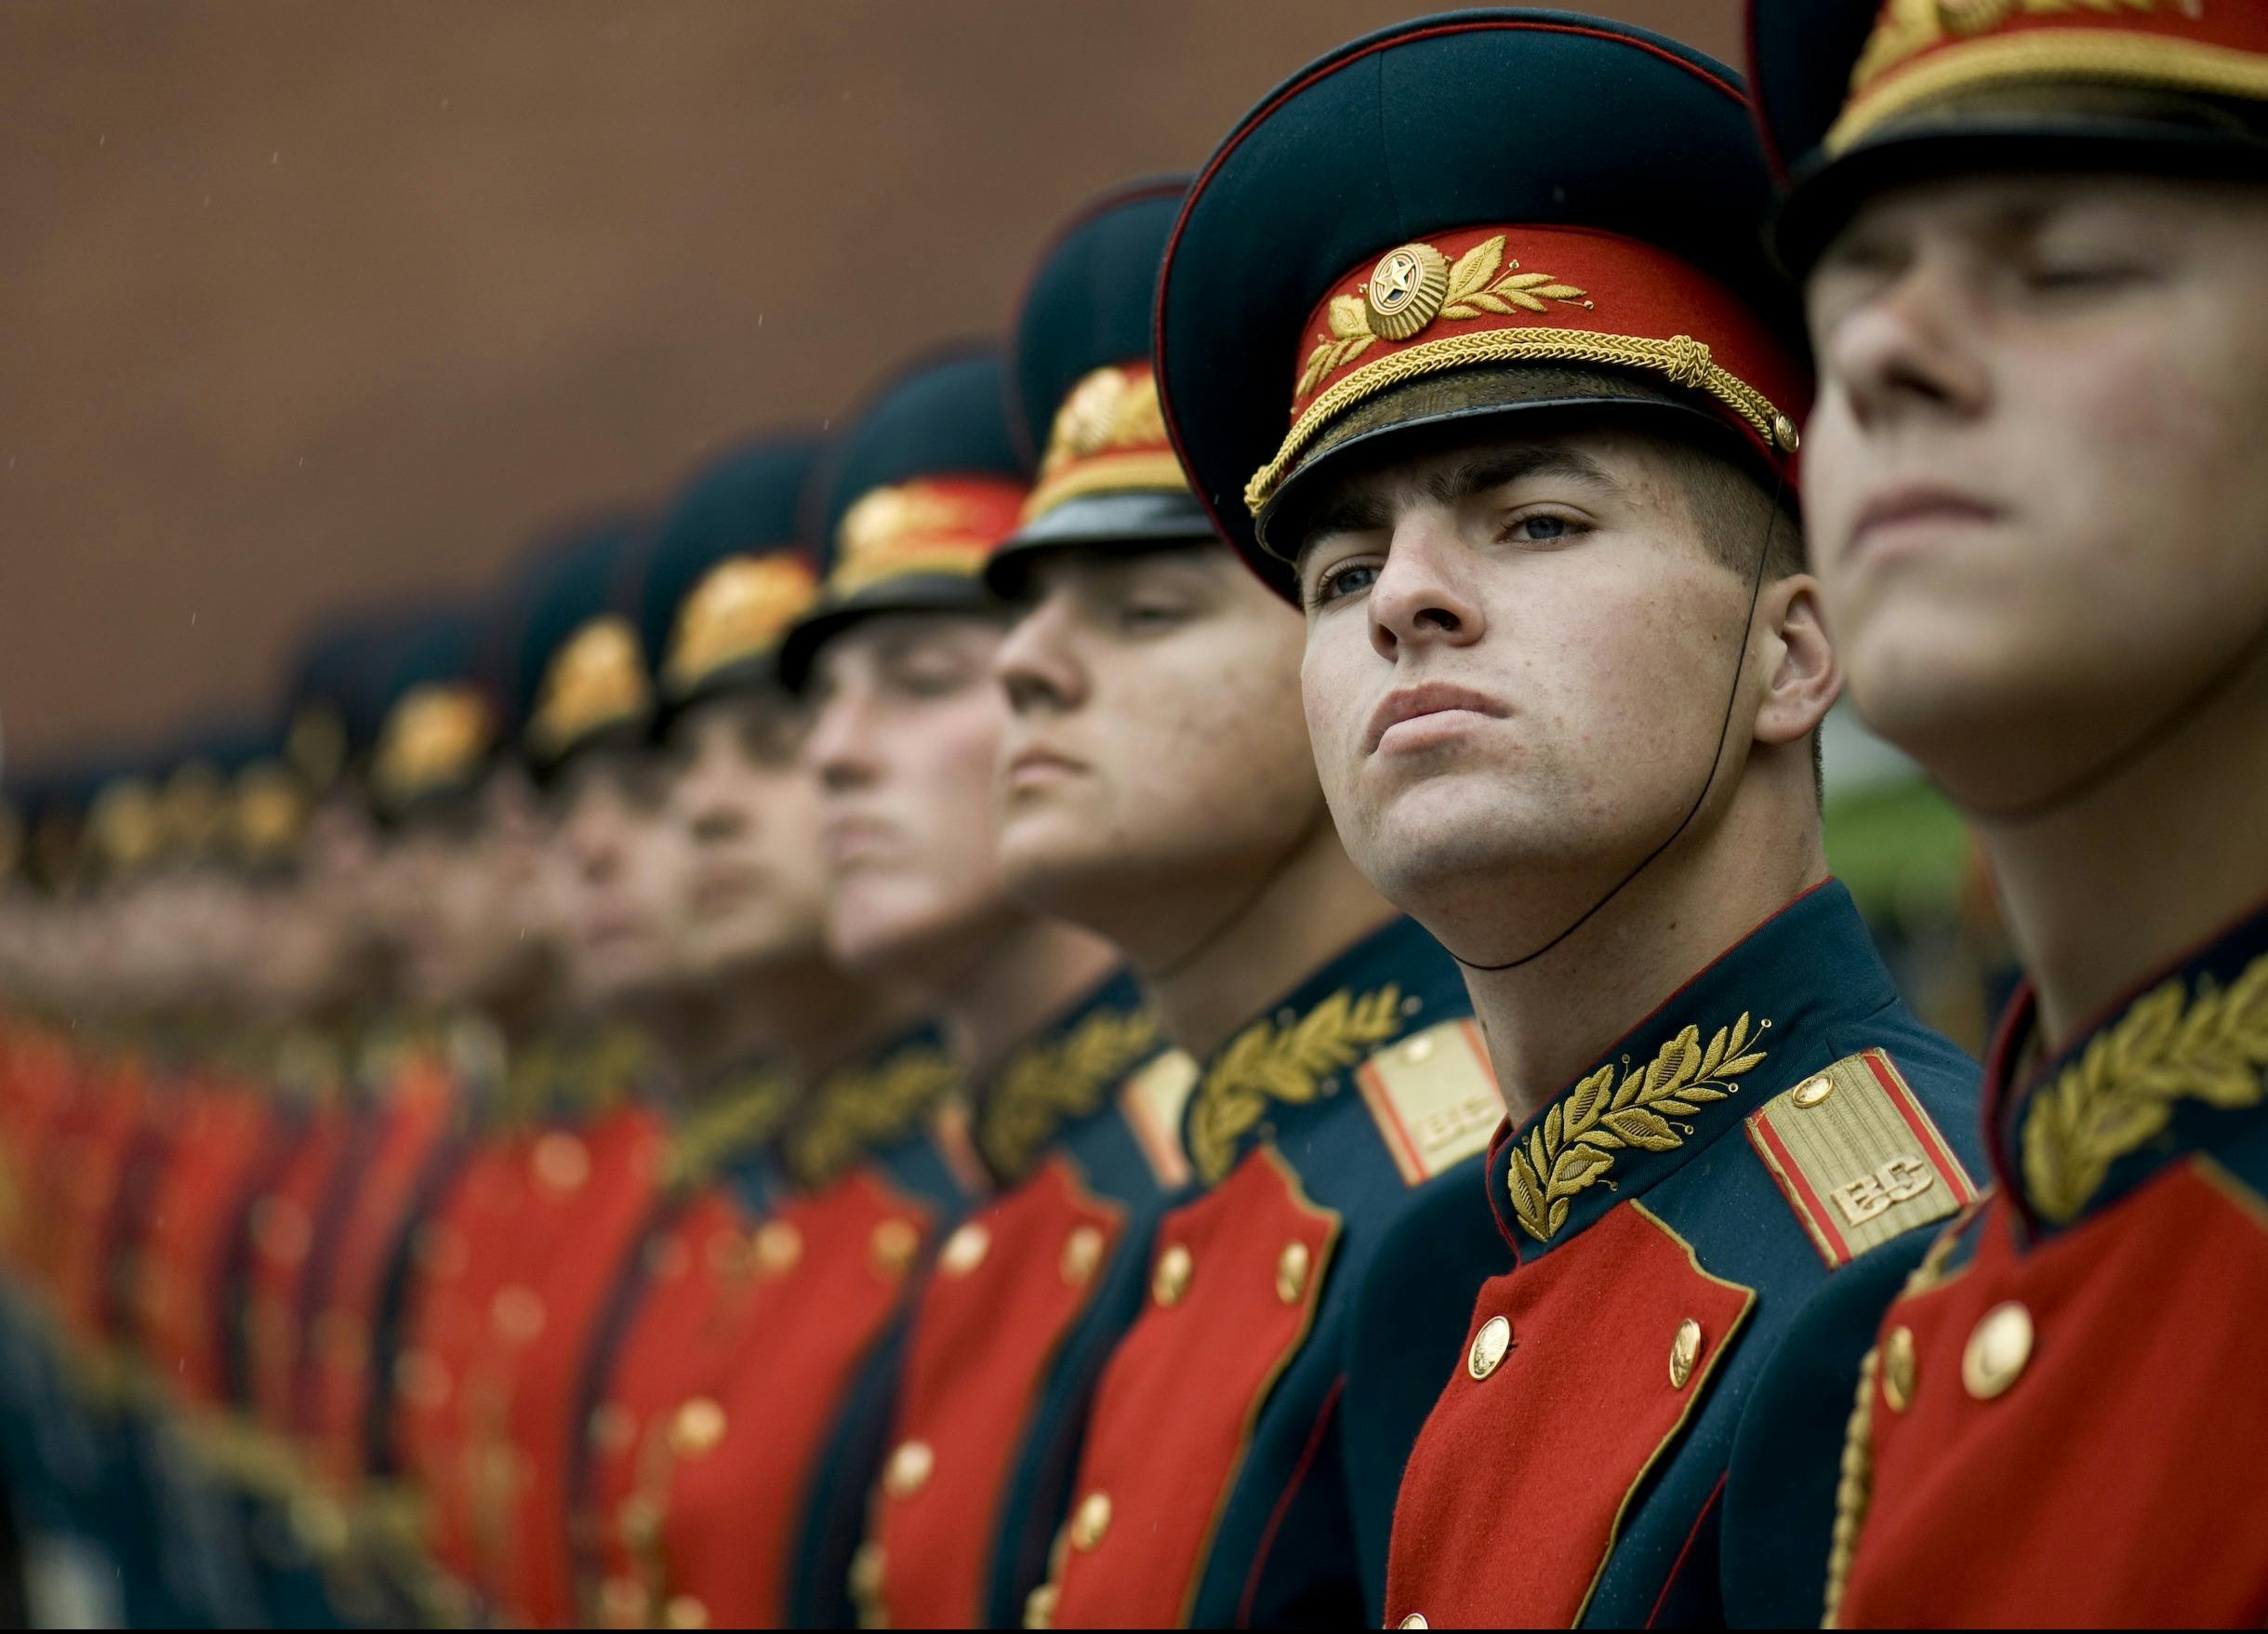 Putin ready to sacrifice his people in Ukraine war, says retired Marine Corps Gen. Jones